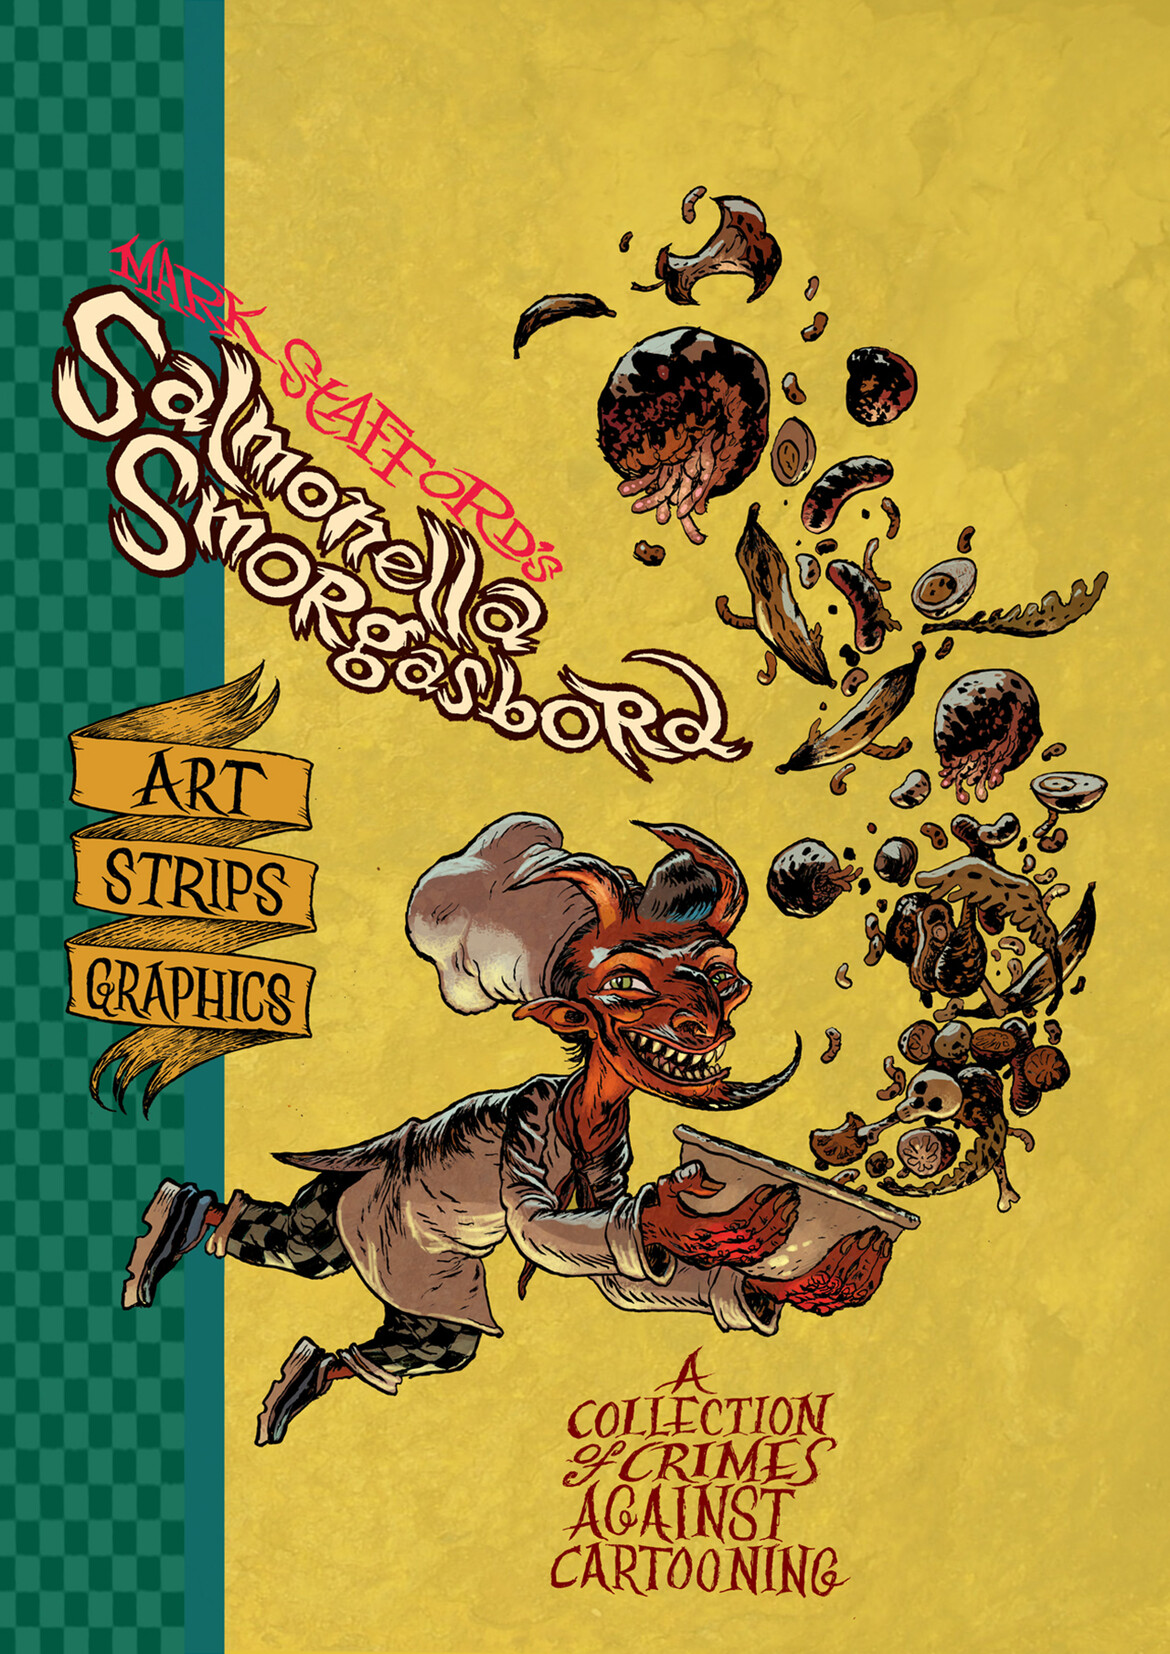 Salmonella Smorgasbord by Mark Stafford